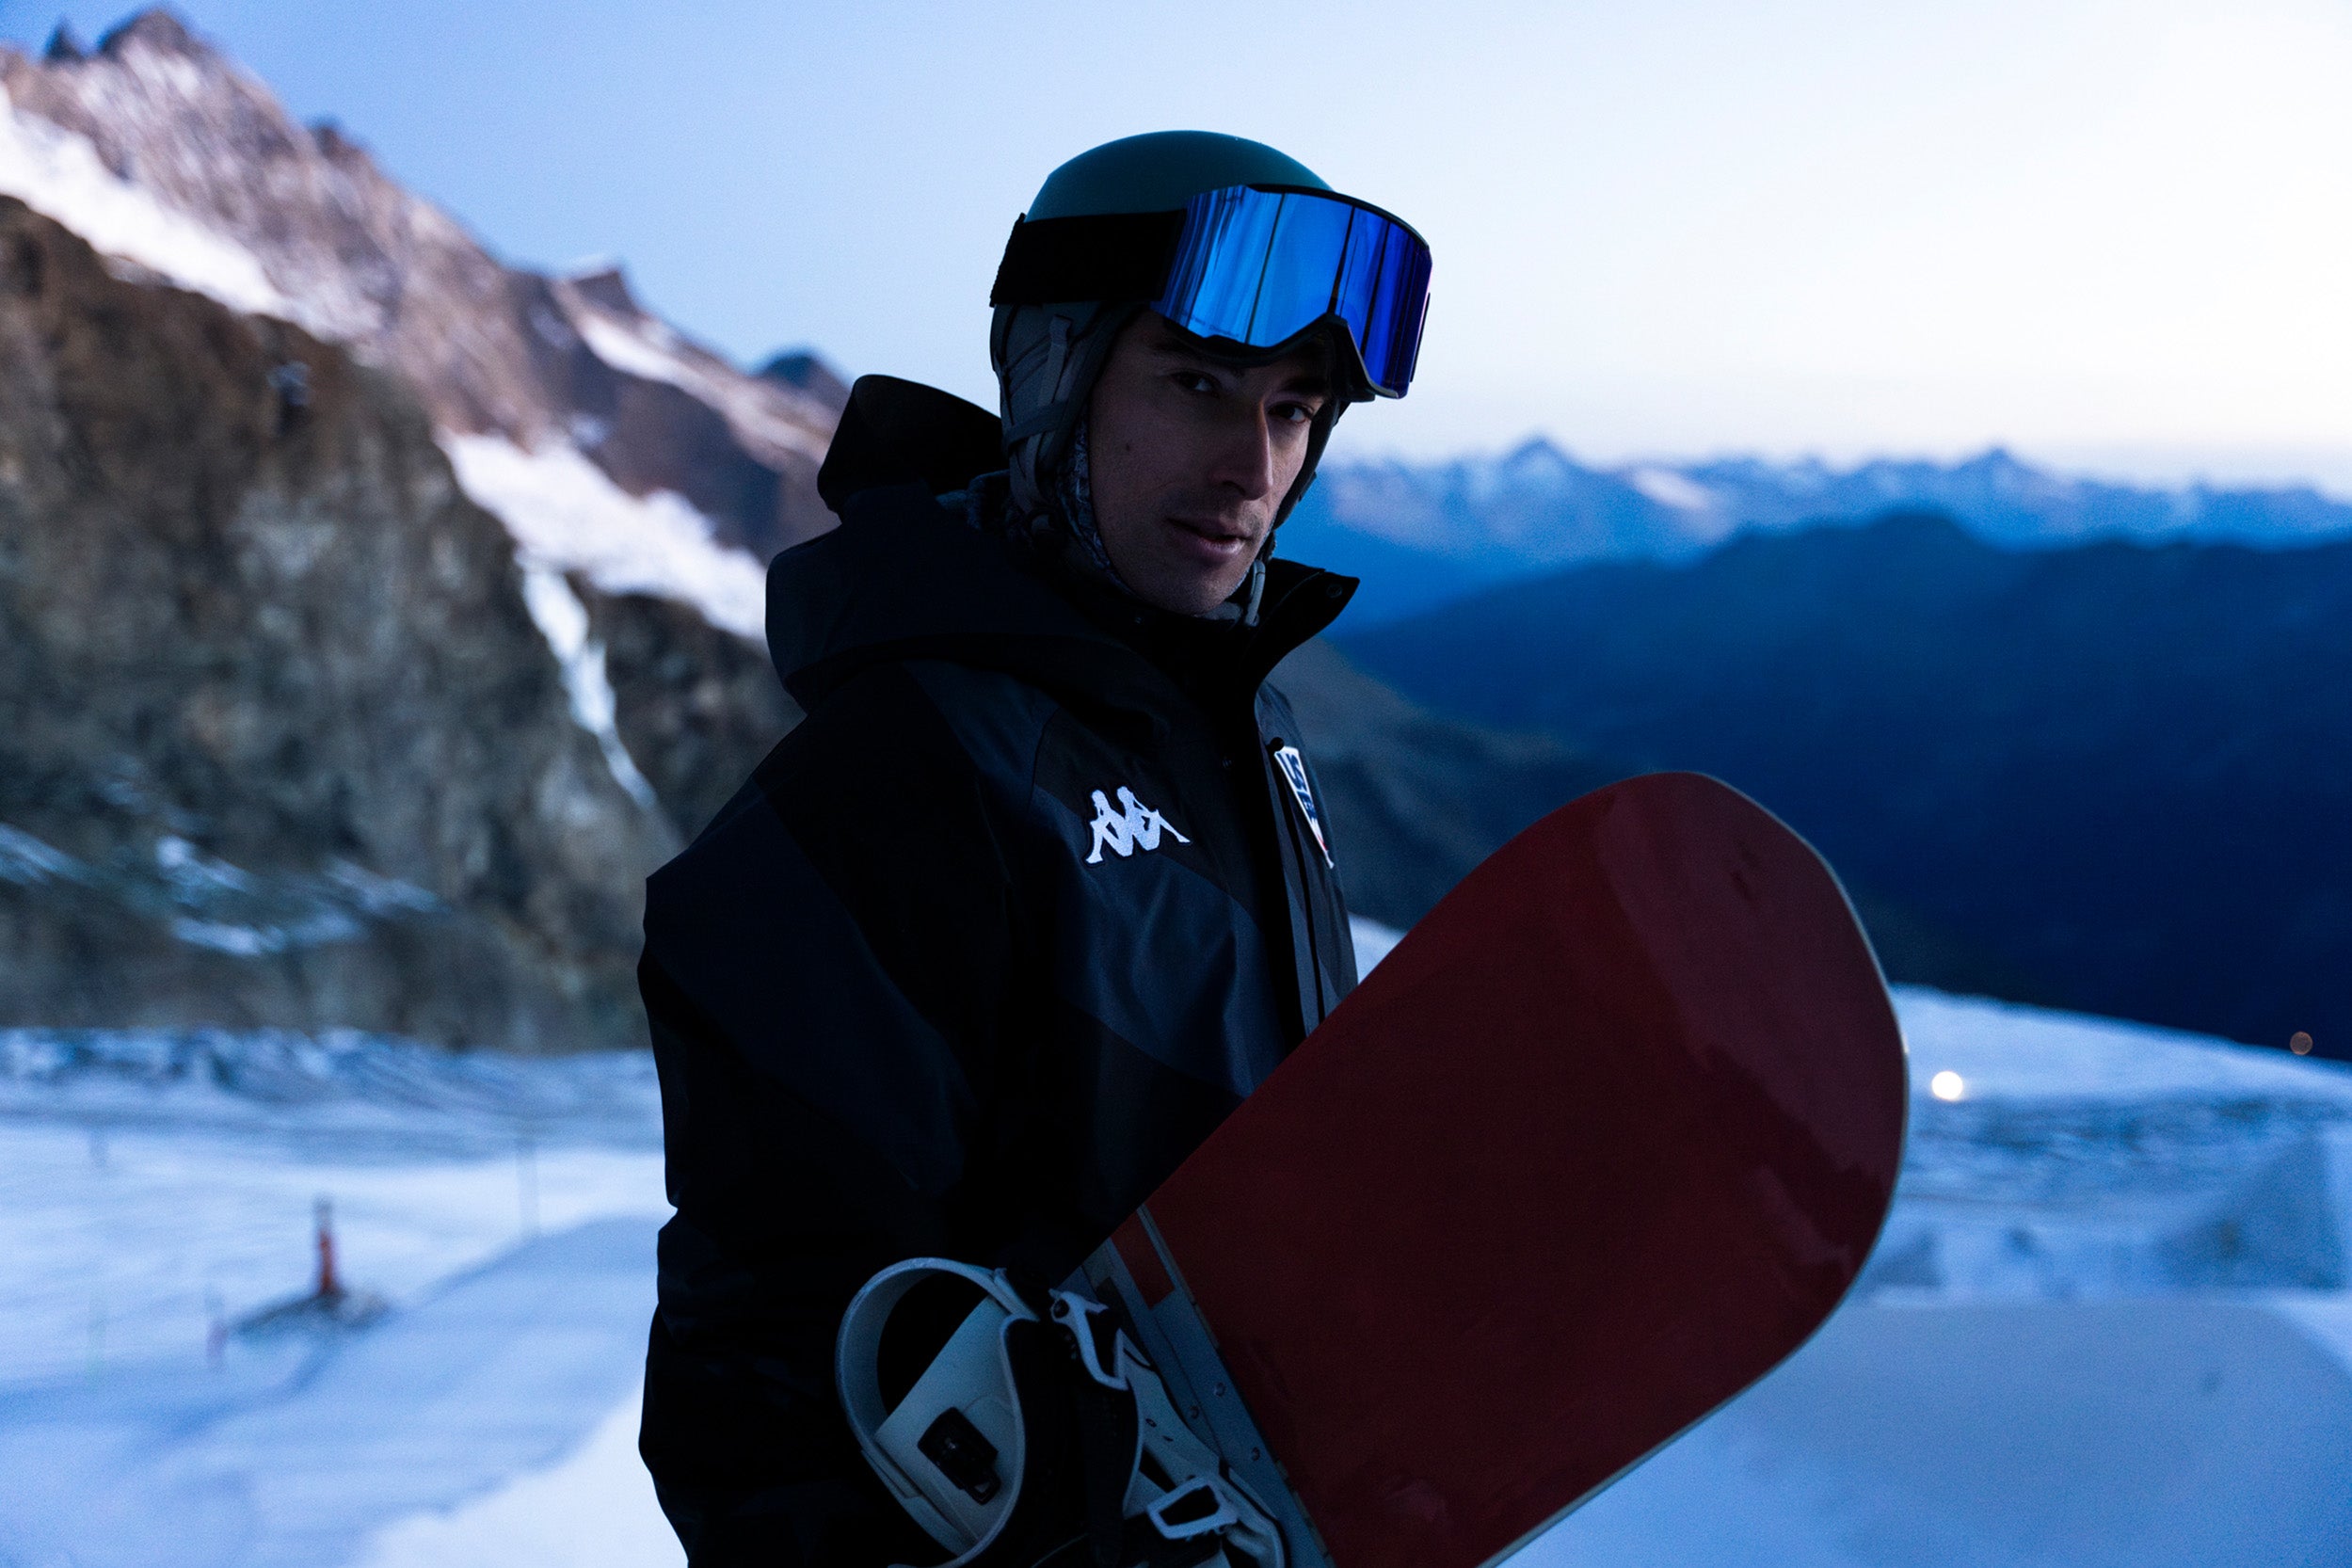 Kappa is the Official Partner Ski U.S. the Snowboard Kappa and Team of – USA